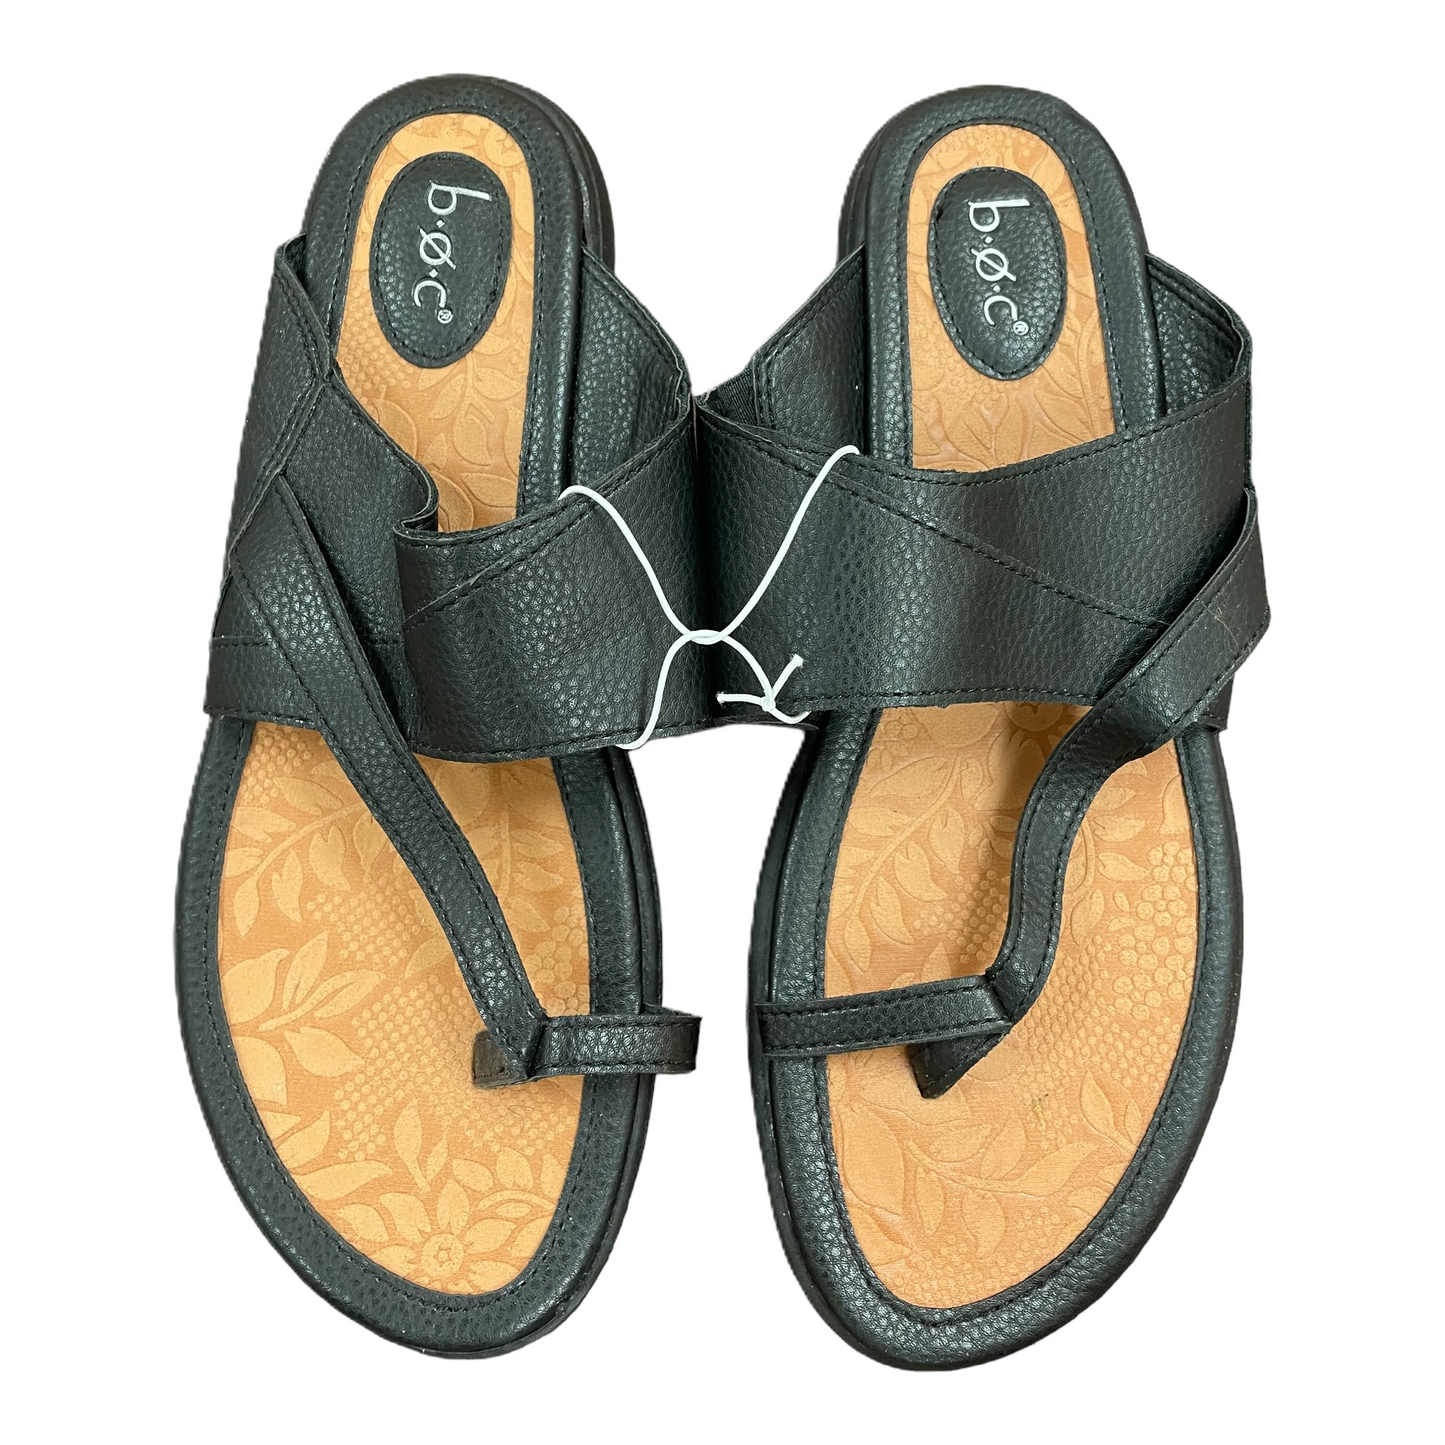 Black Sandals Flip Flops By Boc, Size: 11